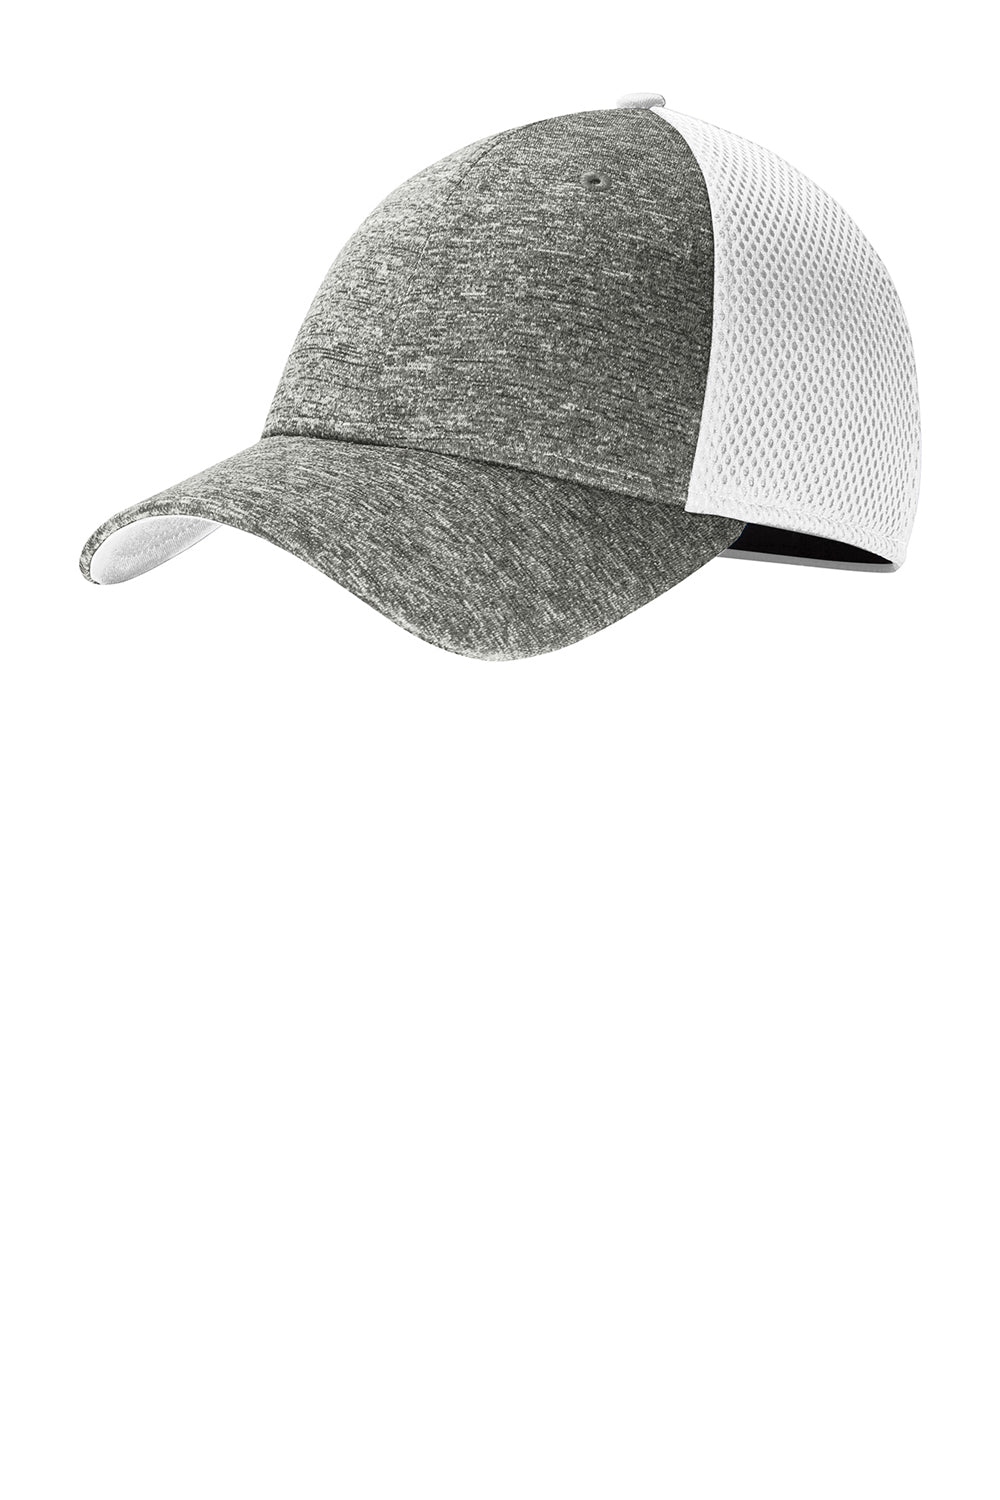 New Era NE702 Mens Stretch Fit Hat White/Heather Shadow Grey Front